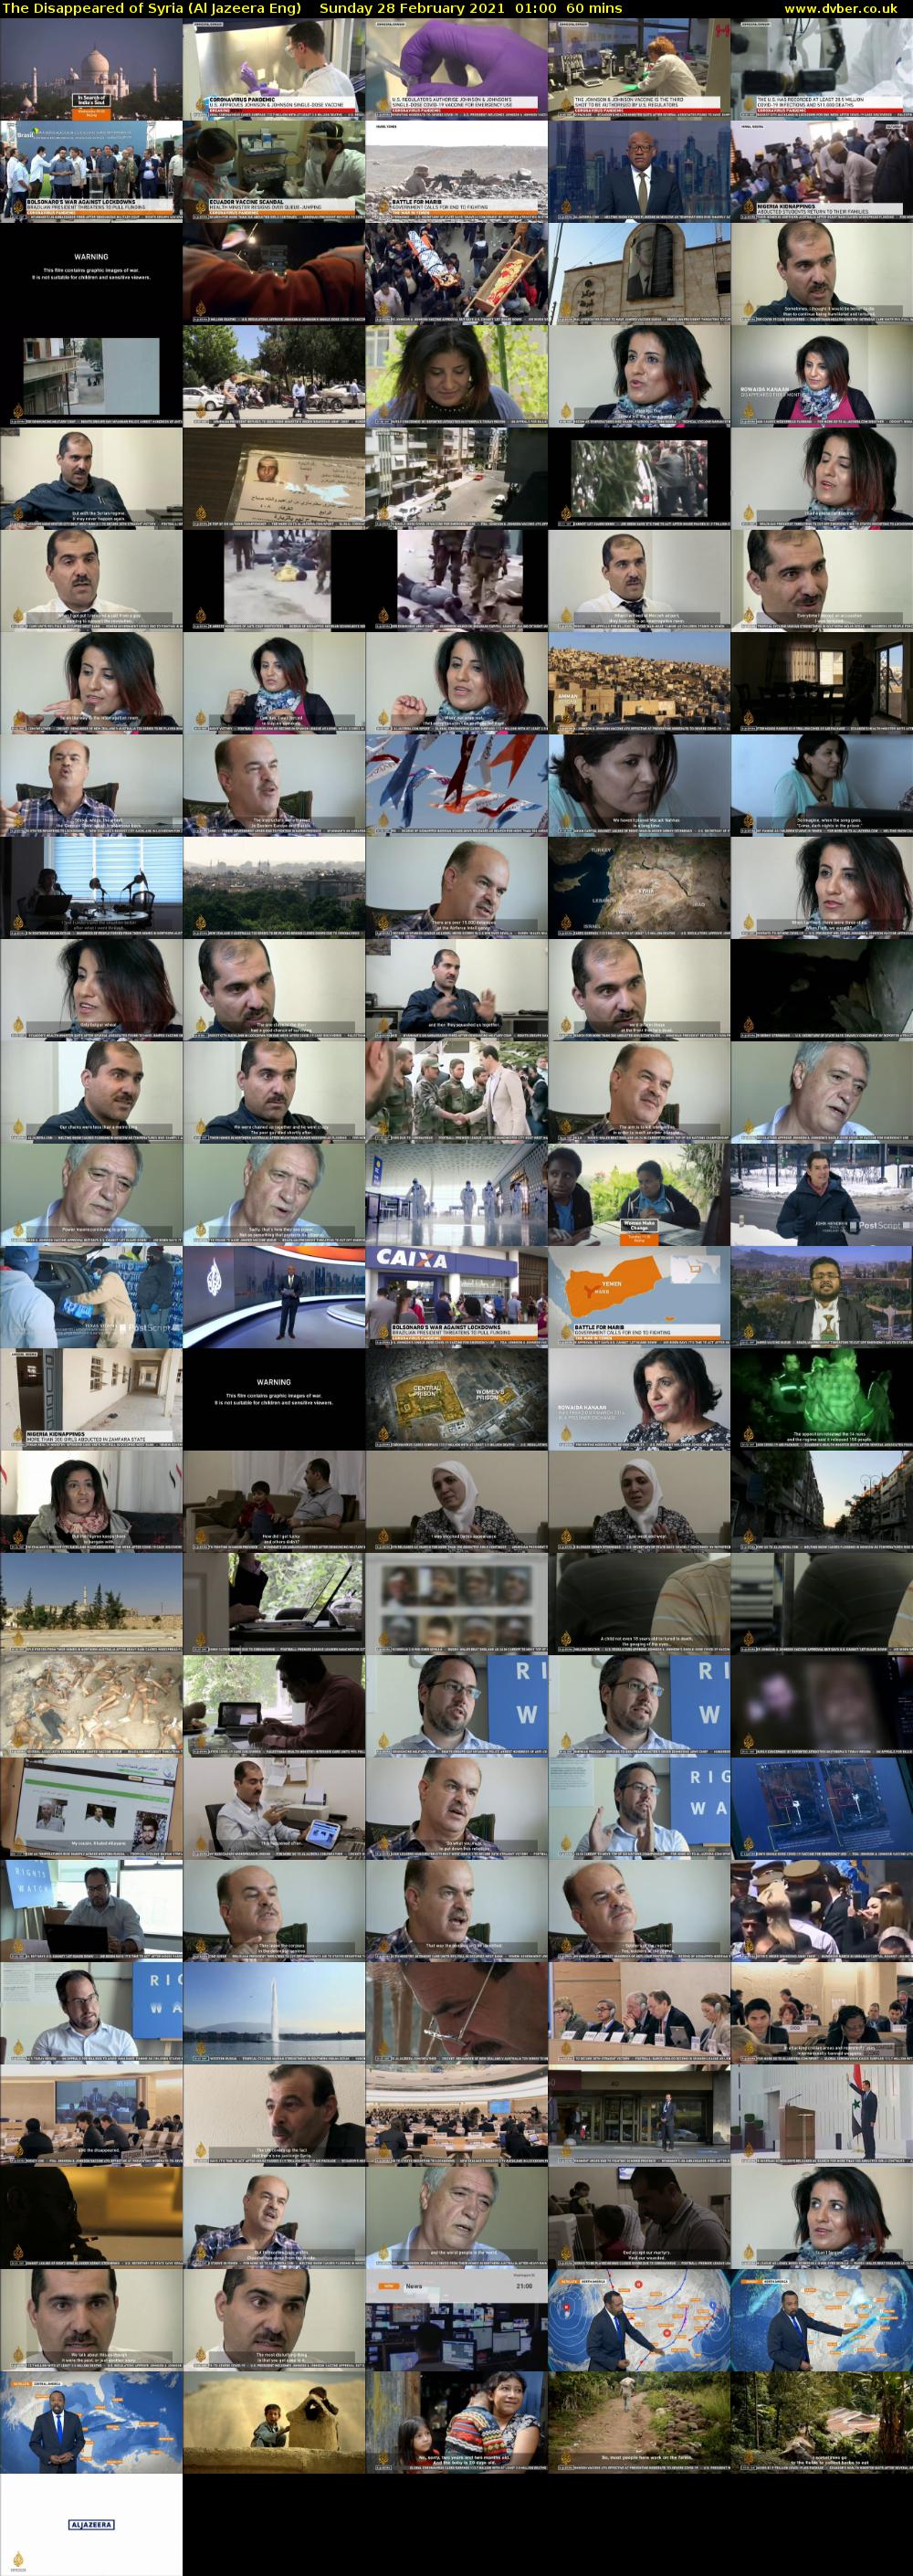 The Disappeared of Syria (Al Jazeera Eng) Sunday 28 February 2021 01:00 - 02:00